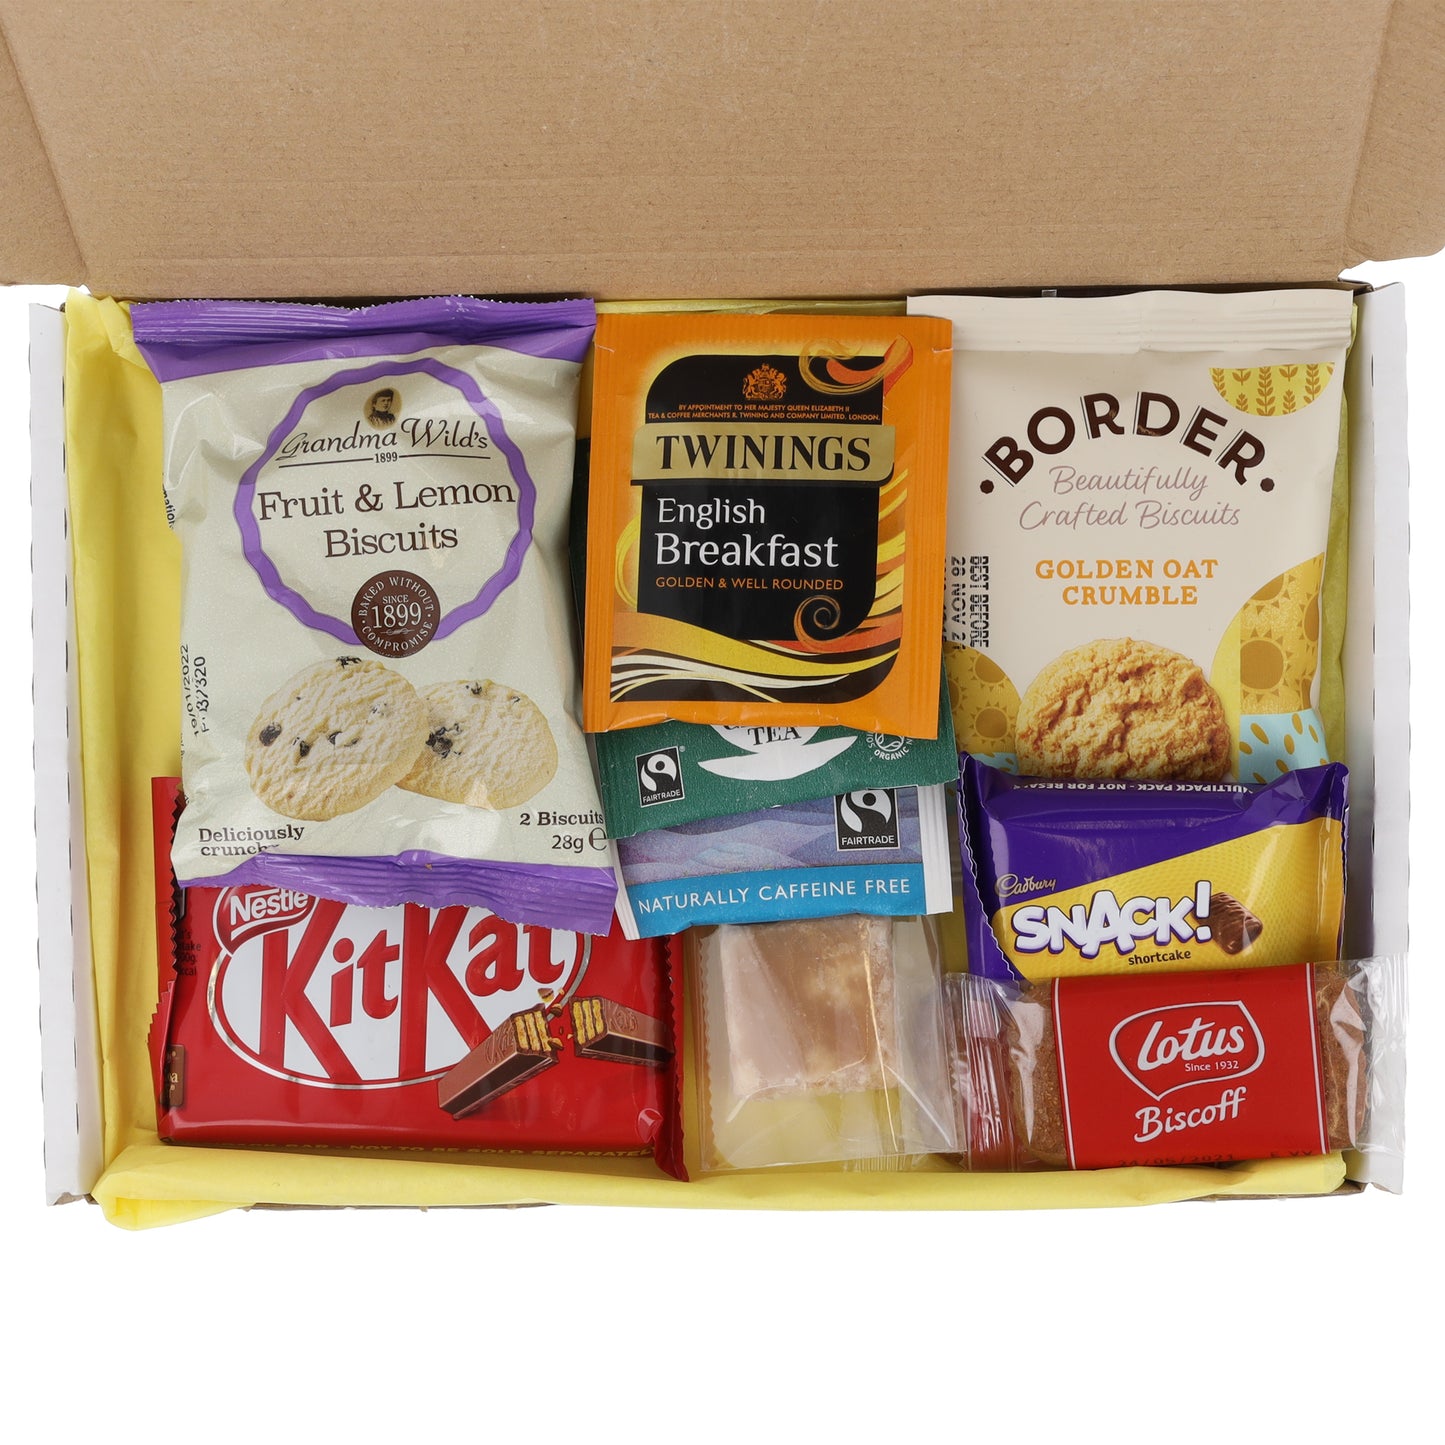 Afternoon Tea & Biscuit Hamper Letterbox Gift Box  - Always Looking Good -   